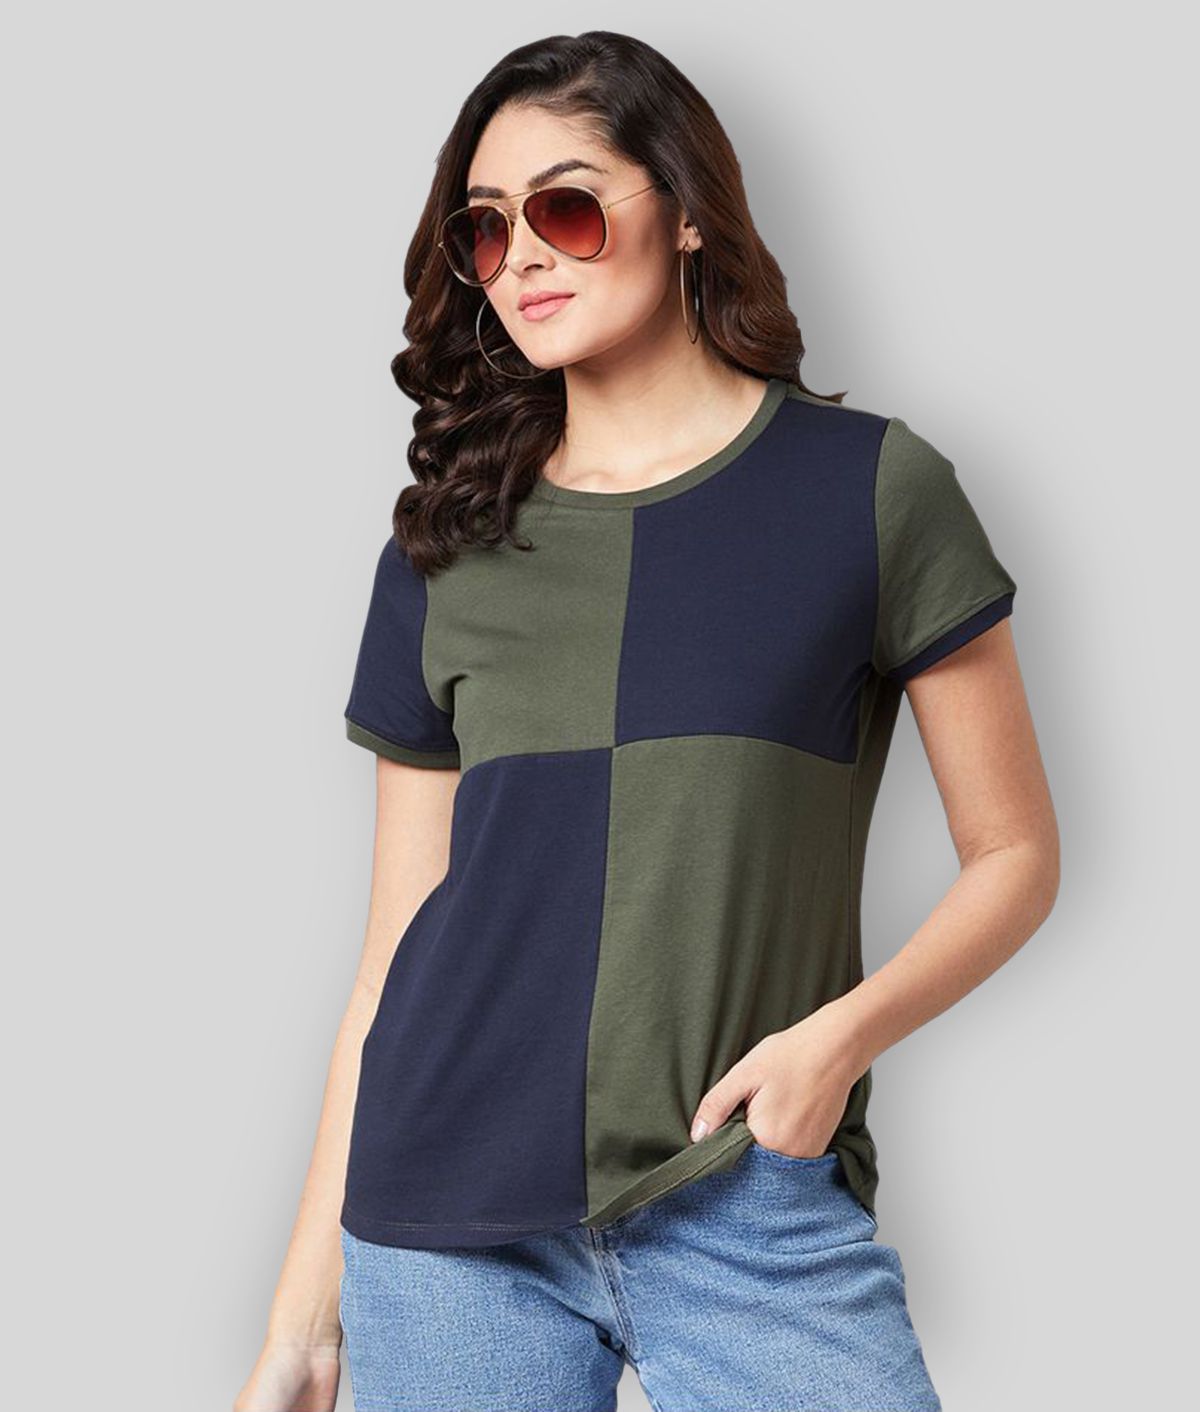 AUSK - Multicolor Cotton Regular Fit Women's T-Shirt ( Pack of 1 )